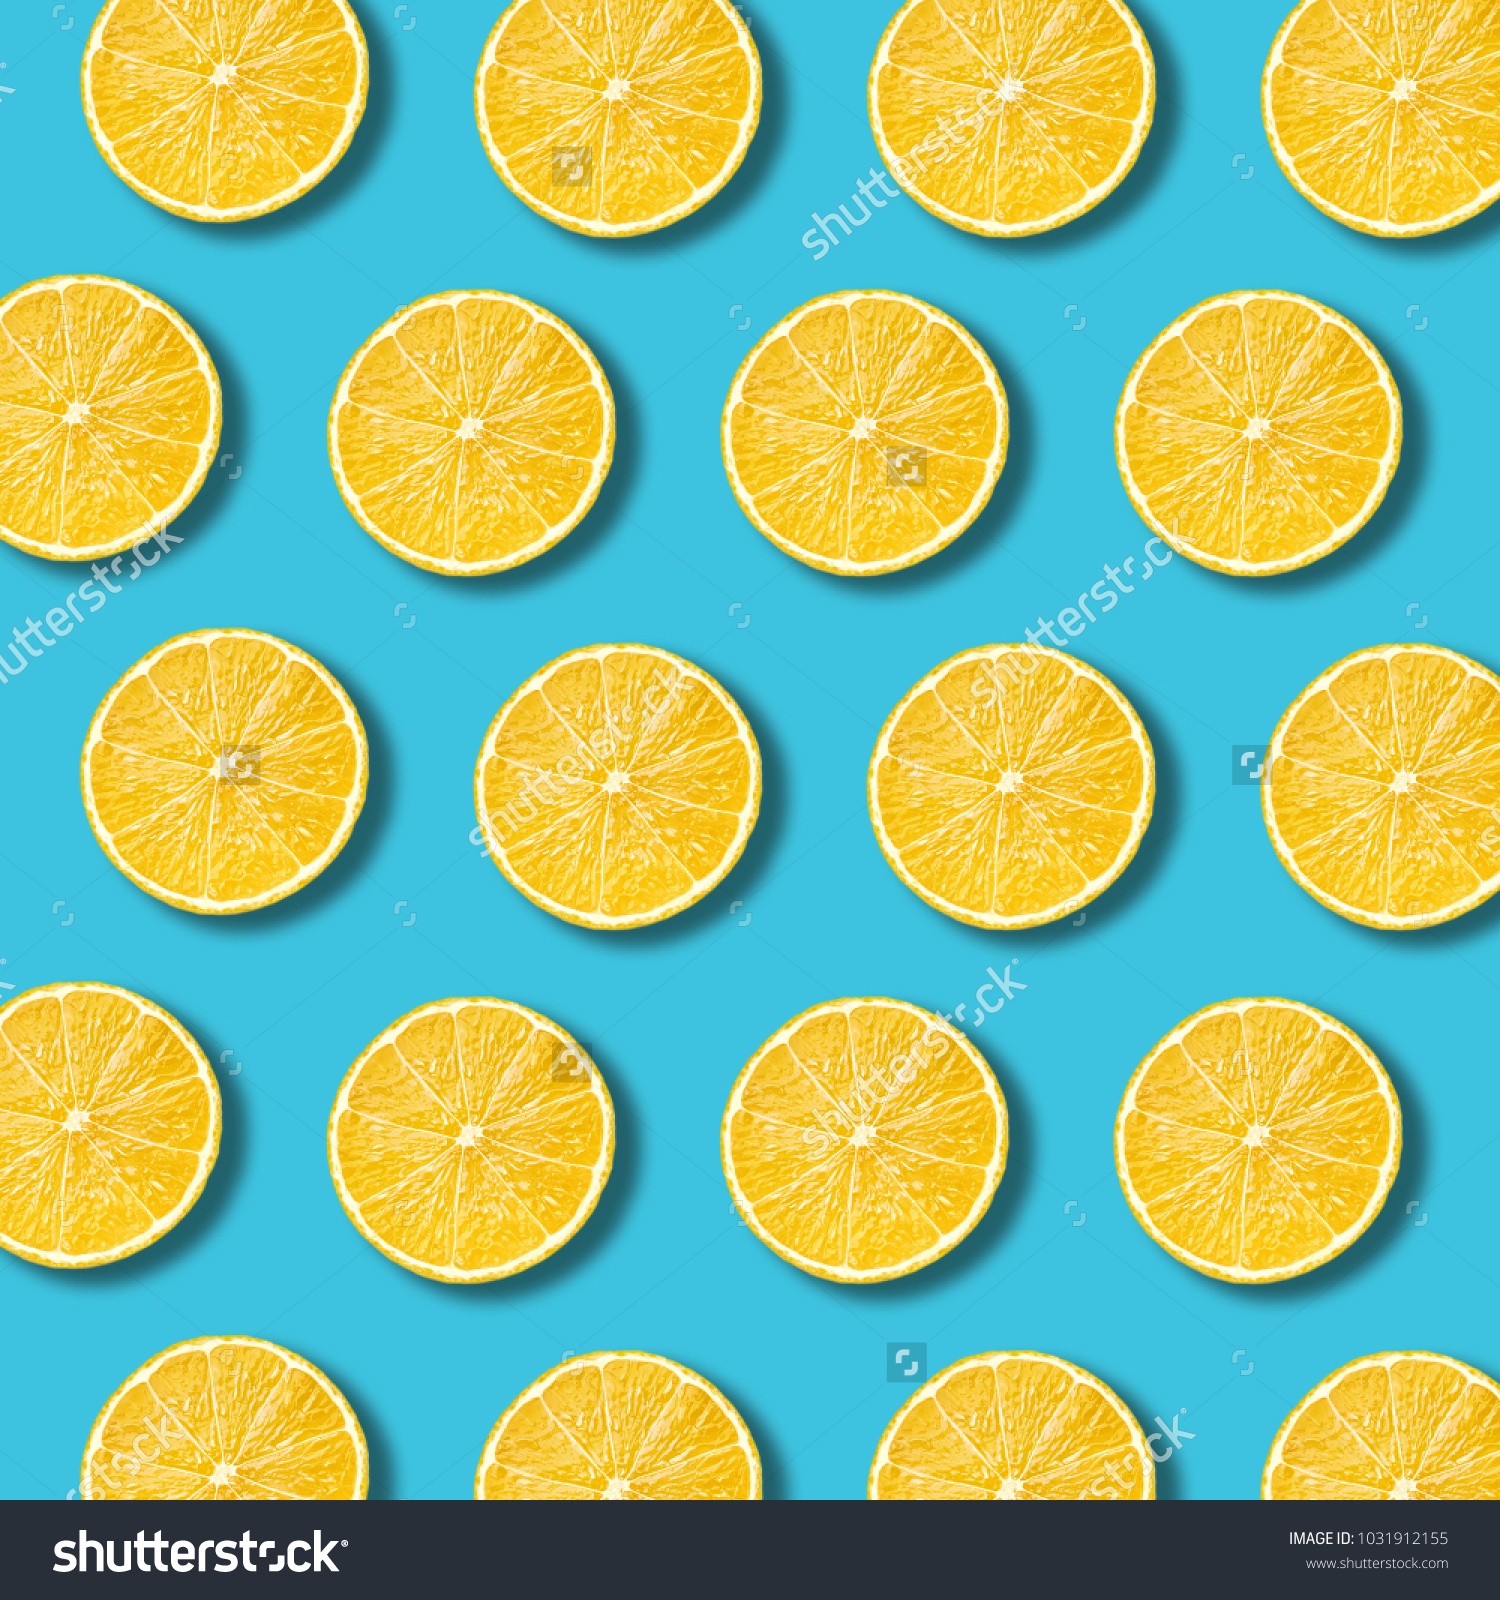 Lemon slices pattern on vibrant turquoise color background. Minimal flat lay food texture  #1031912155